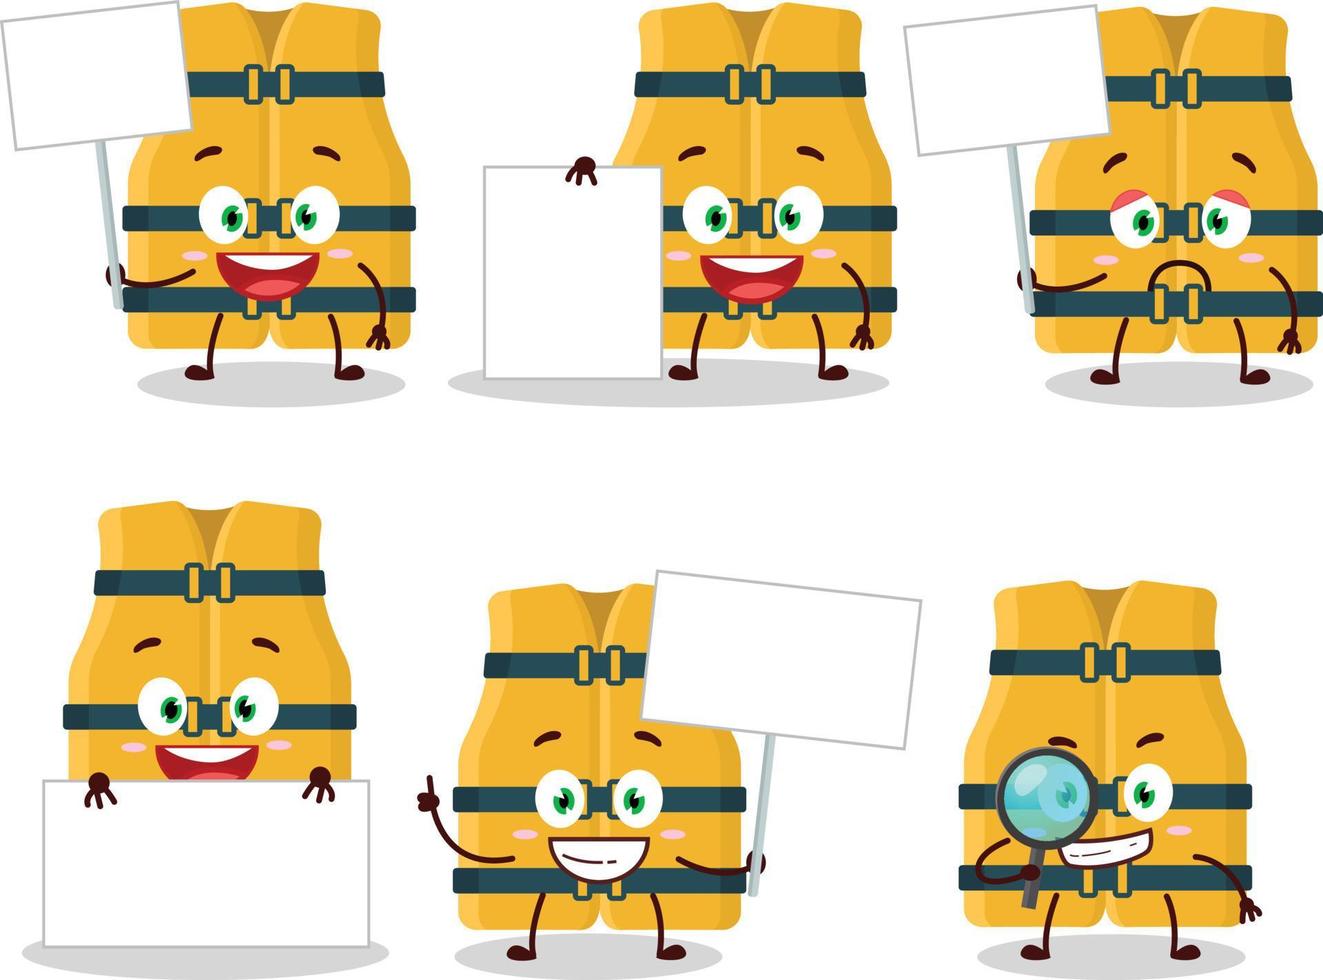 Life vest cartoon character bring information board vector